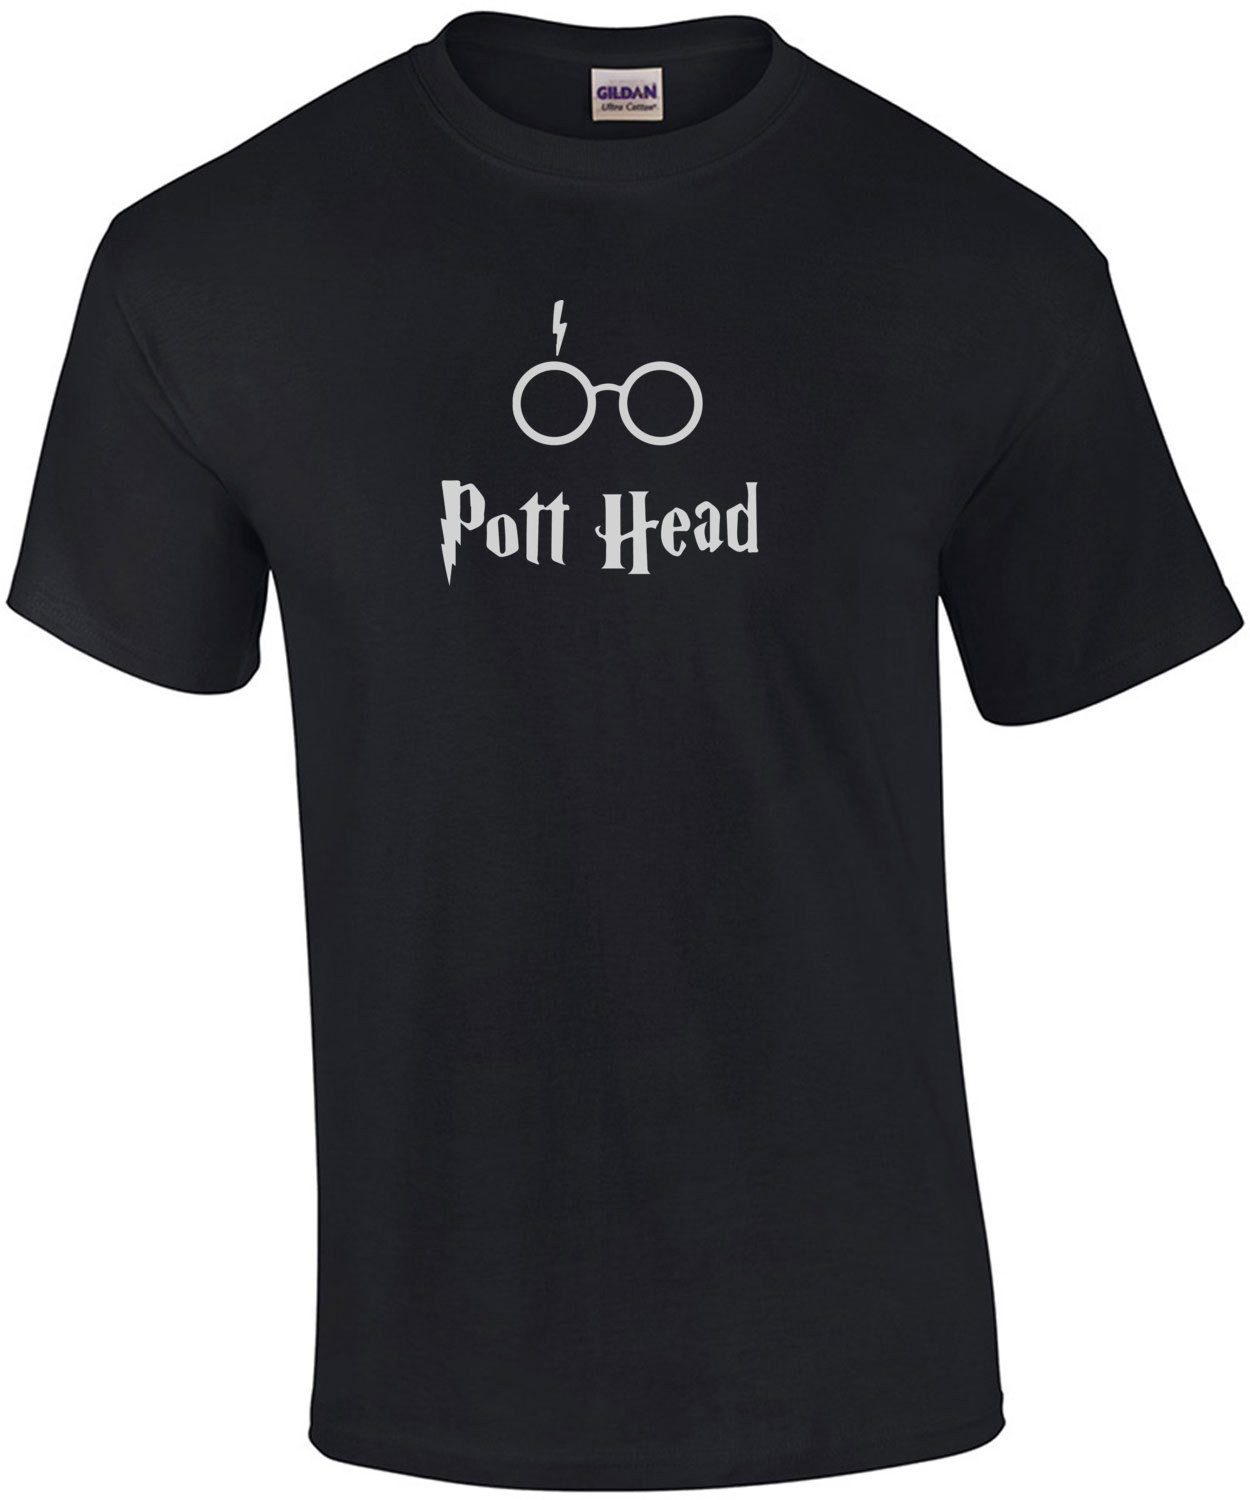 Pott Head - Harry Potter T-Shirt